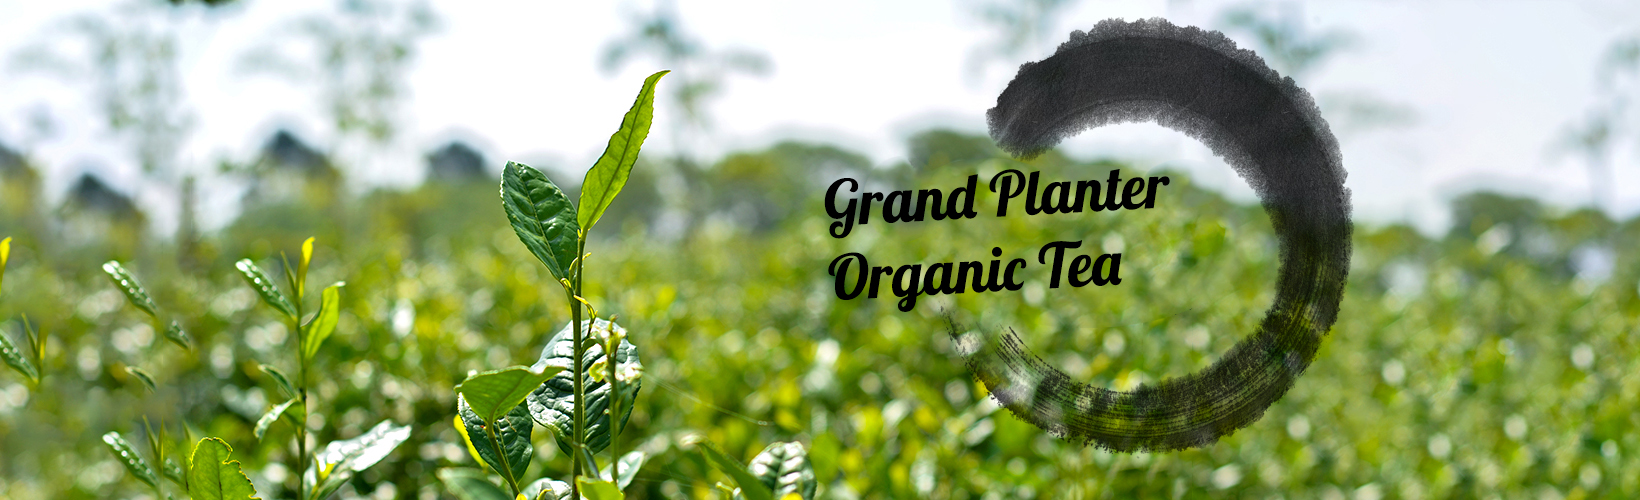 Organic tea and herbs